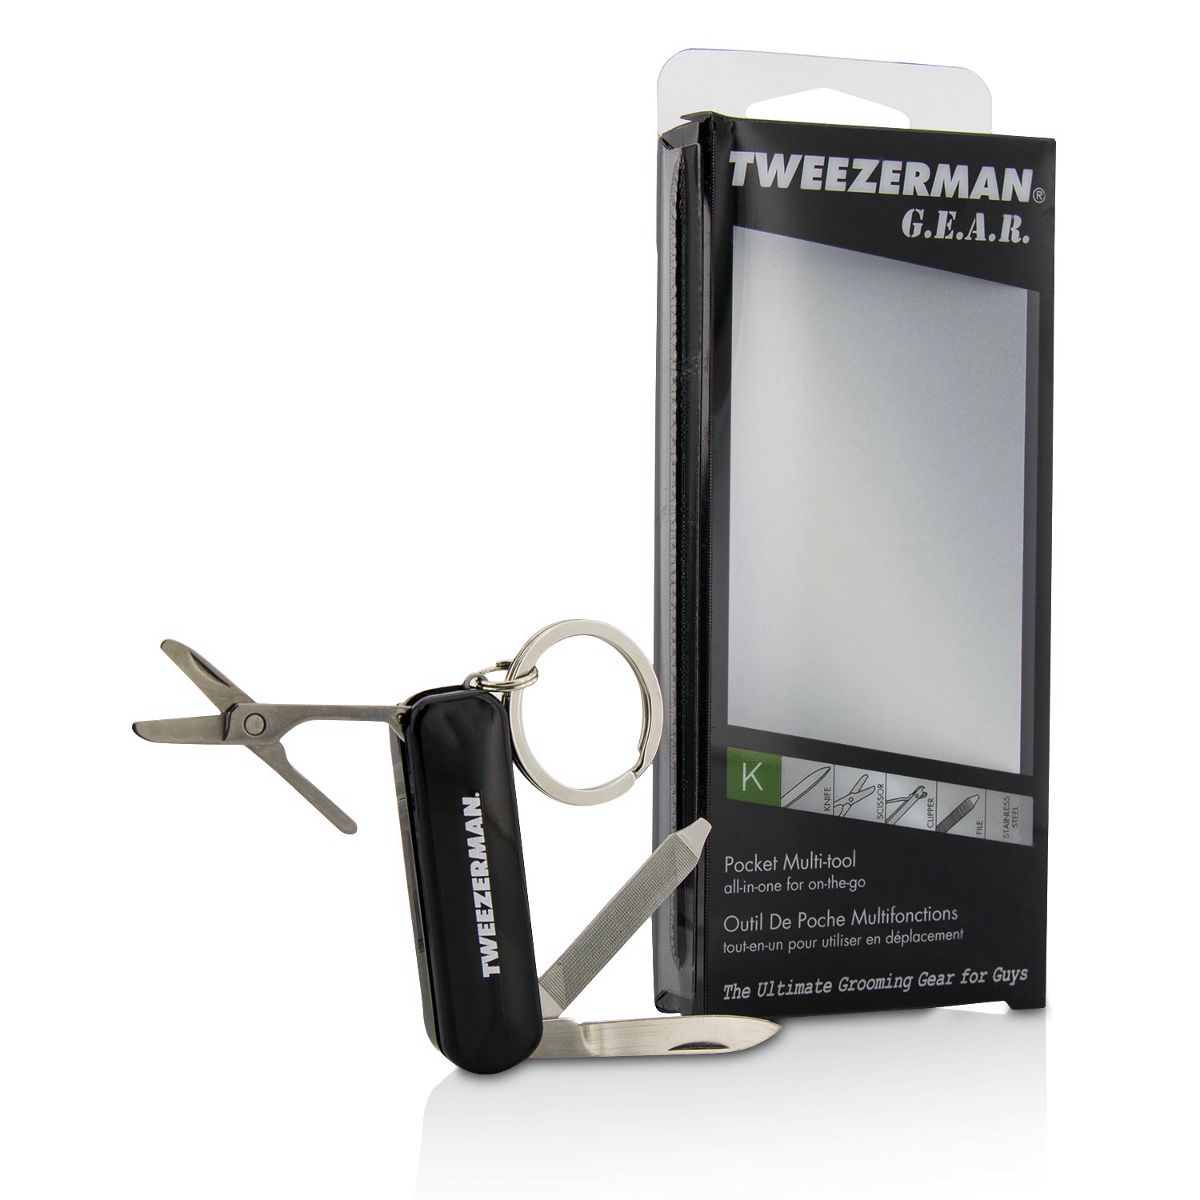 G.E.A.R. Pocket Multi-Tool (Folding Nail Clipper Nail File Nose Hair Scissors Pockey Knife) Tweezerman Image